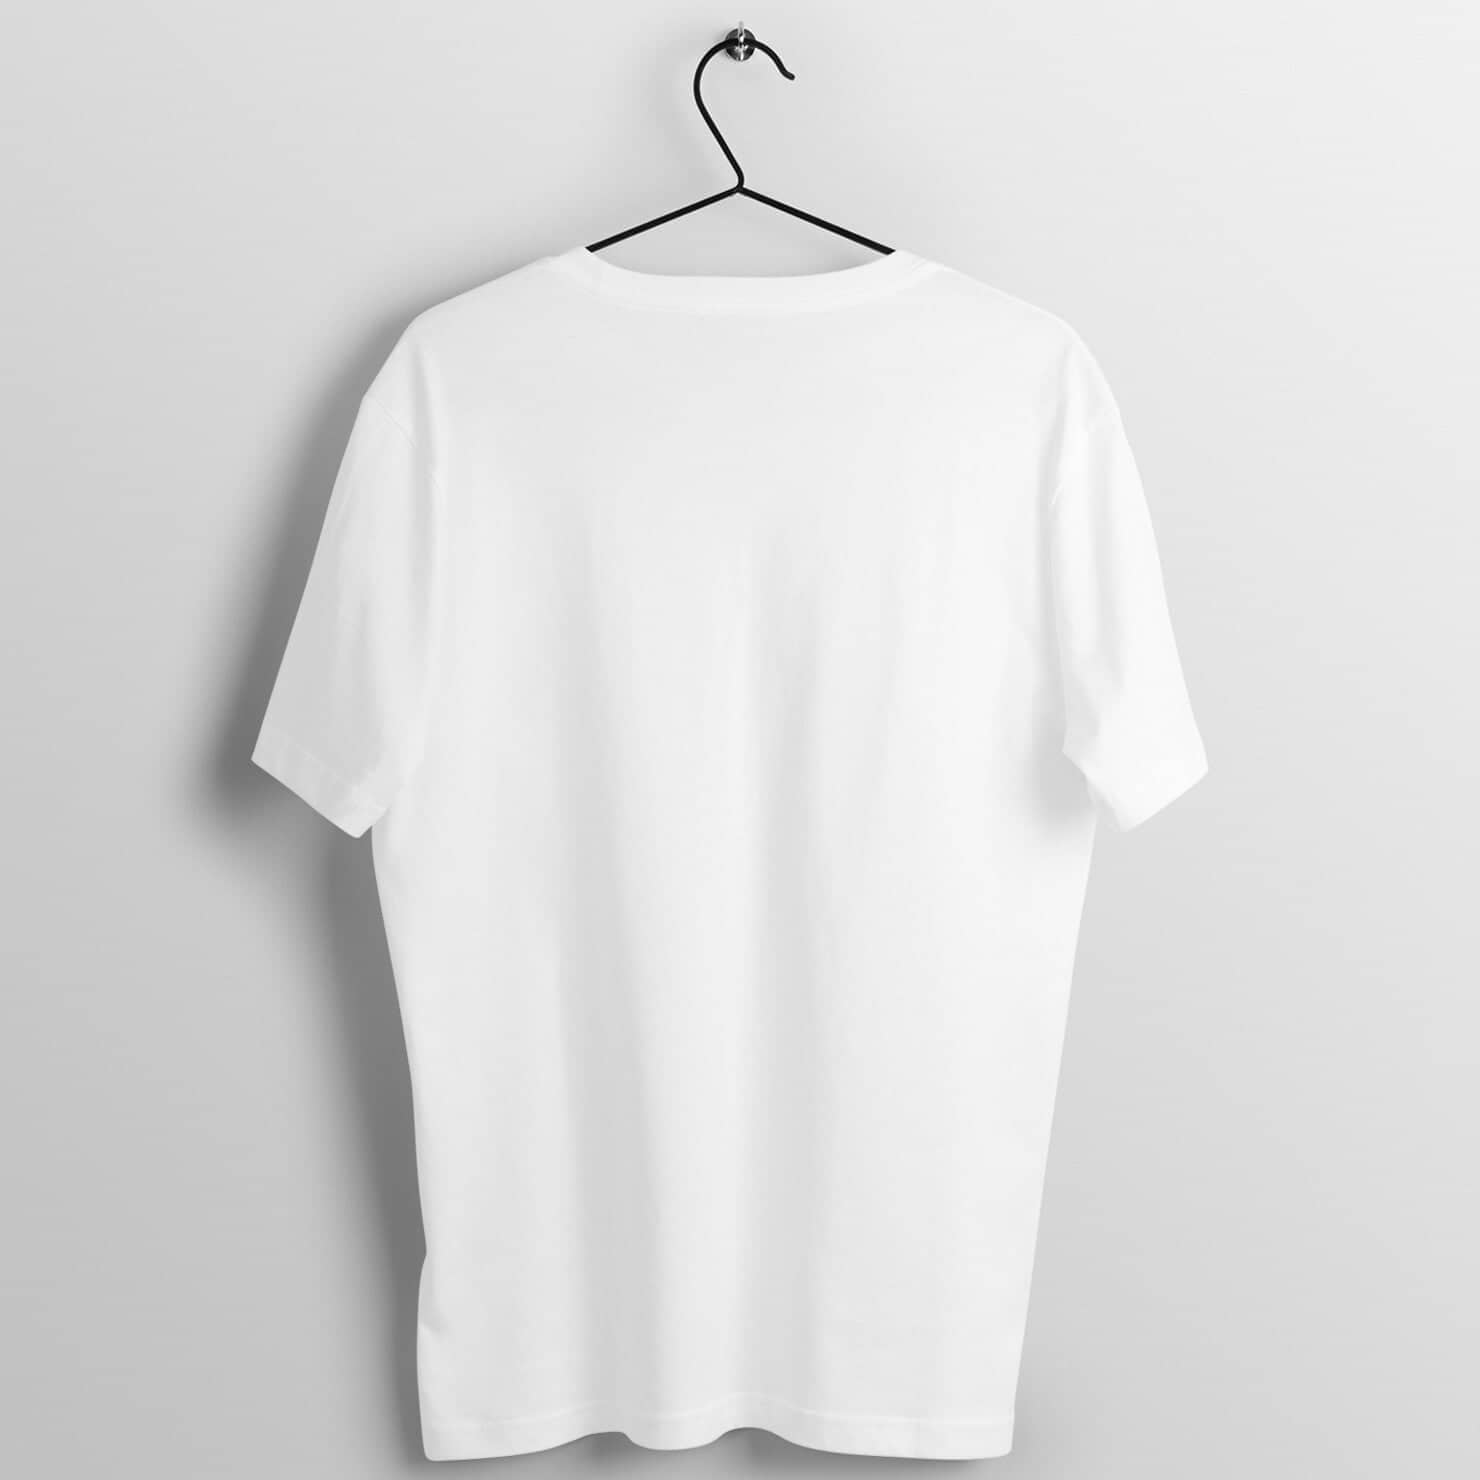 Super Papa Supreme White T Shirt for Men and Women Printrove 